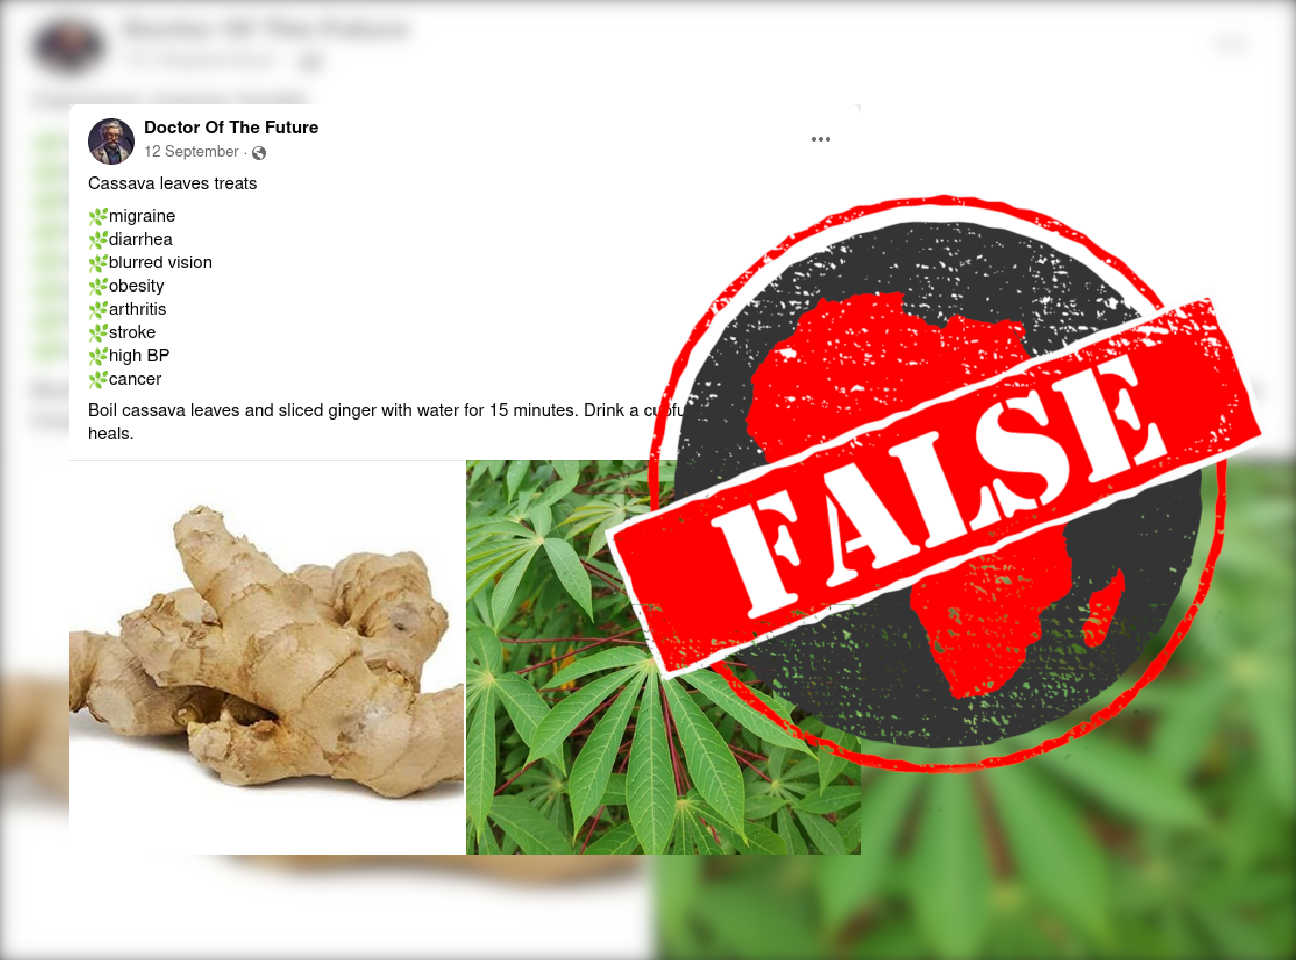 False claim about cassava leaves